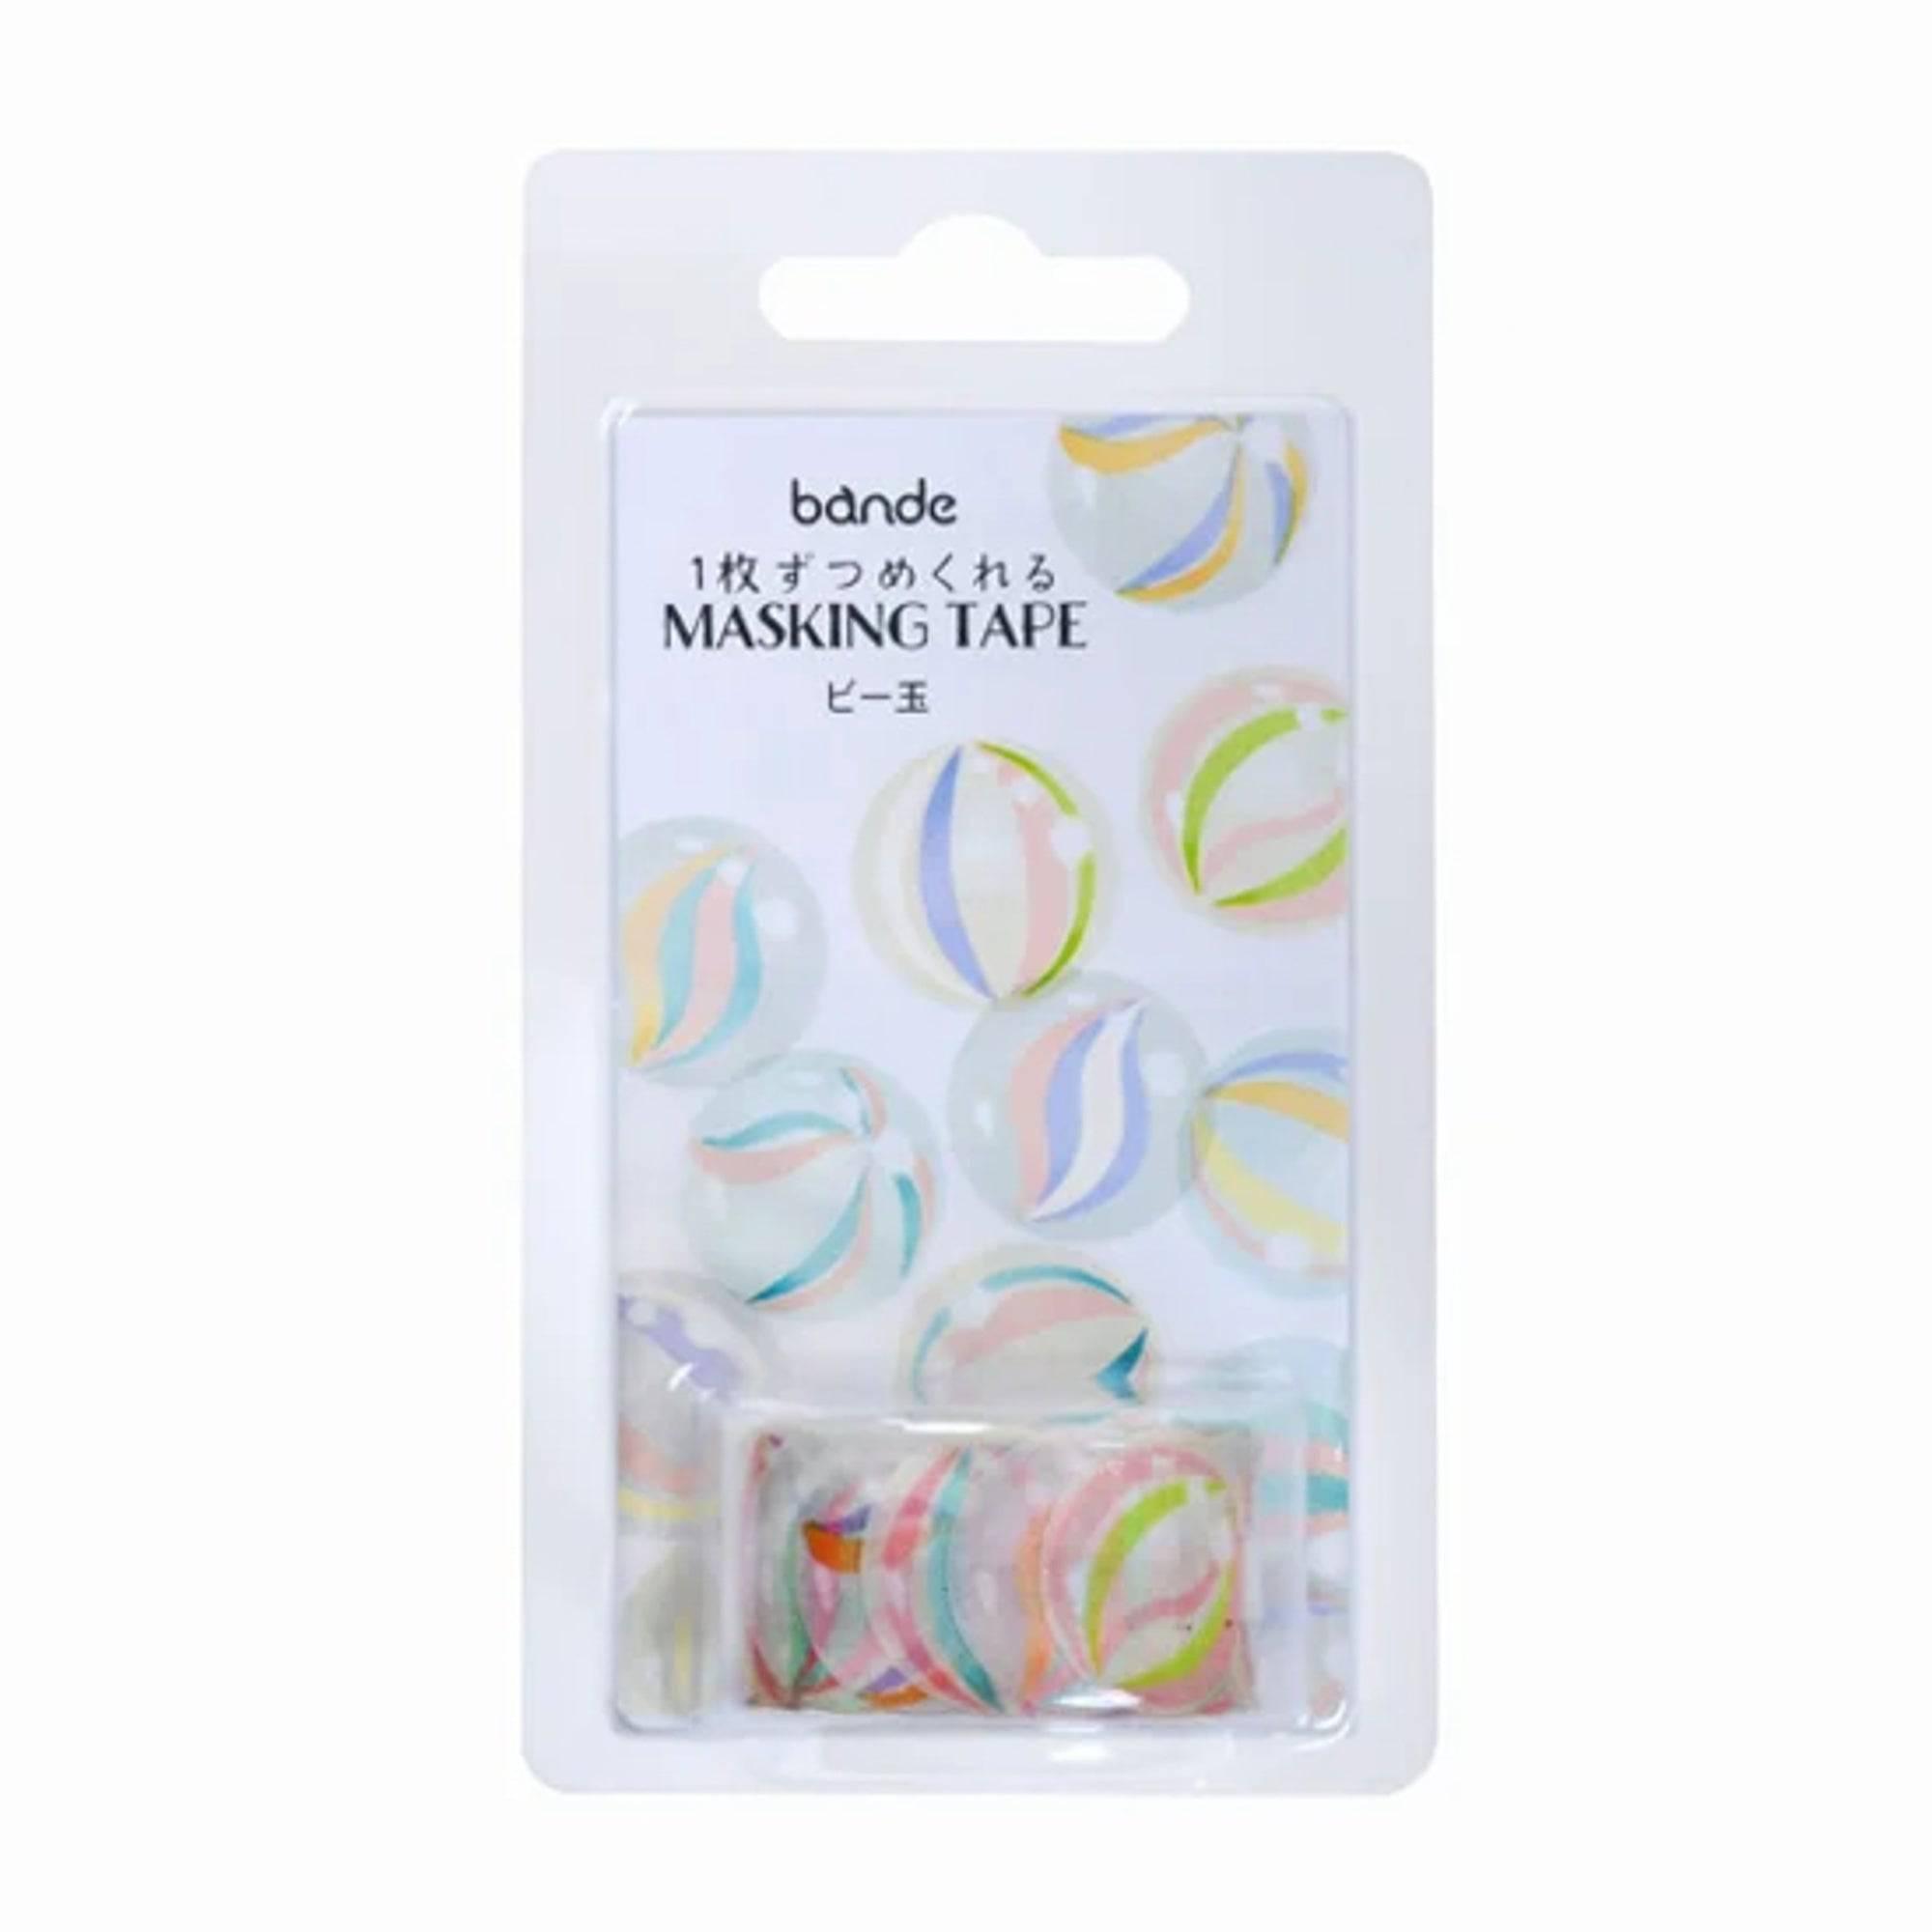 Marble Washi Tape Sticker Roll - Bande - Komorebi Stationery